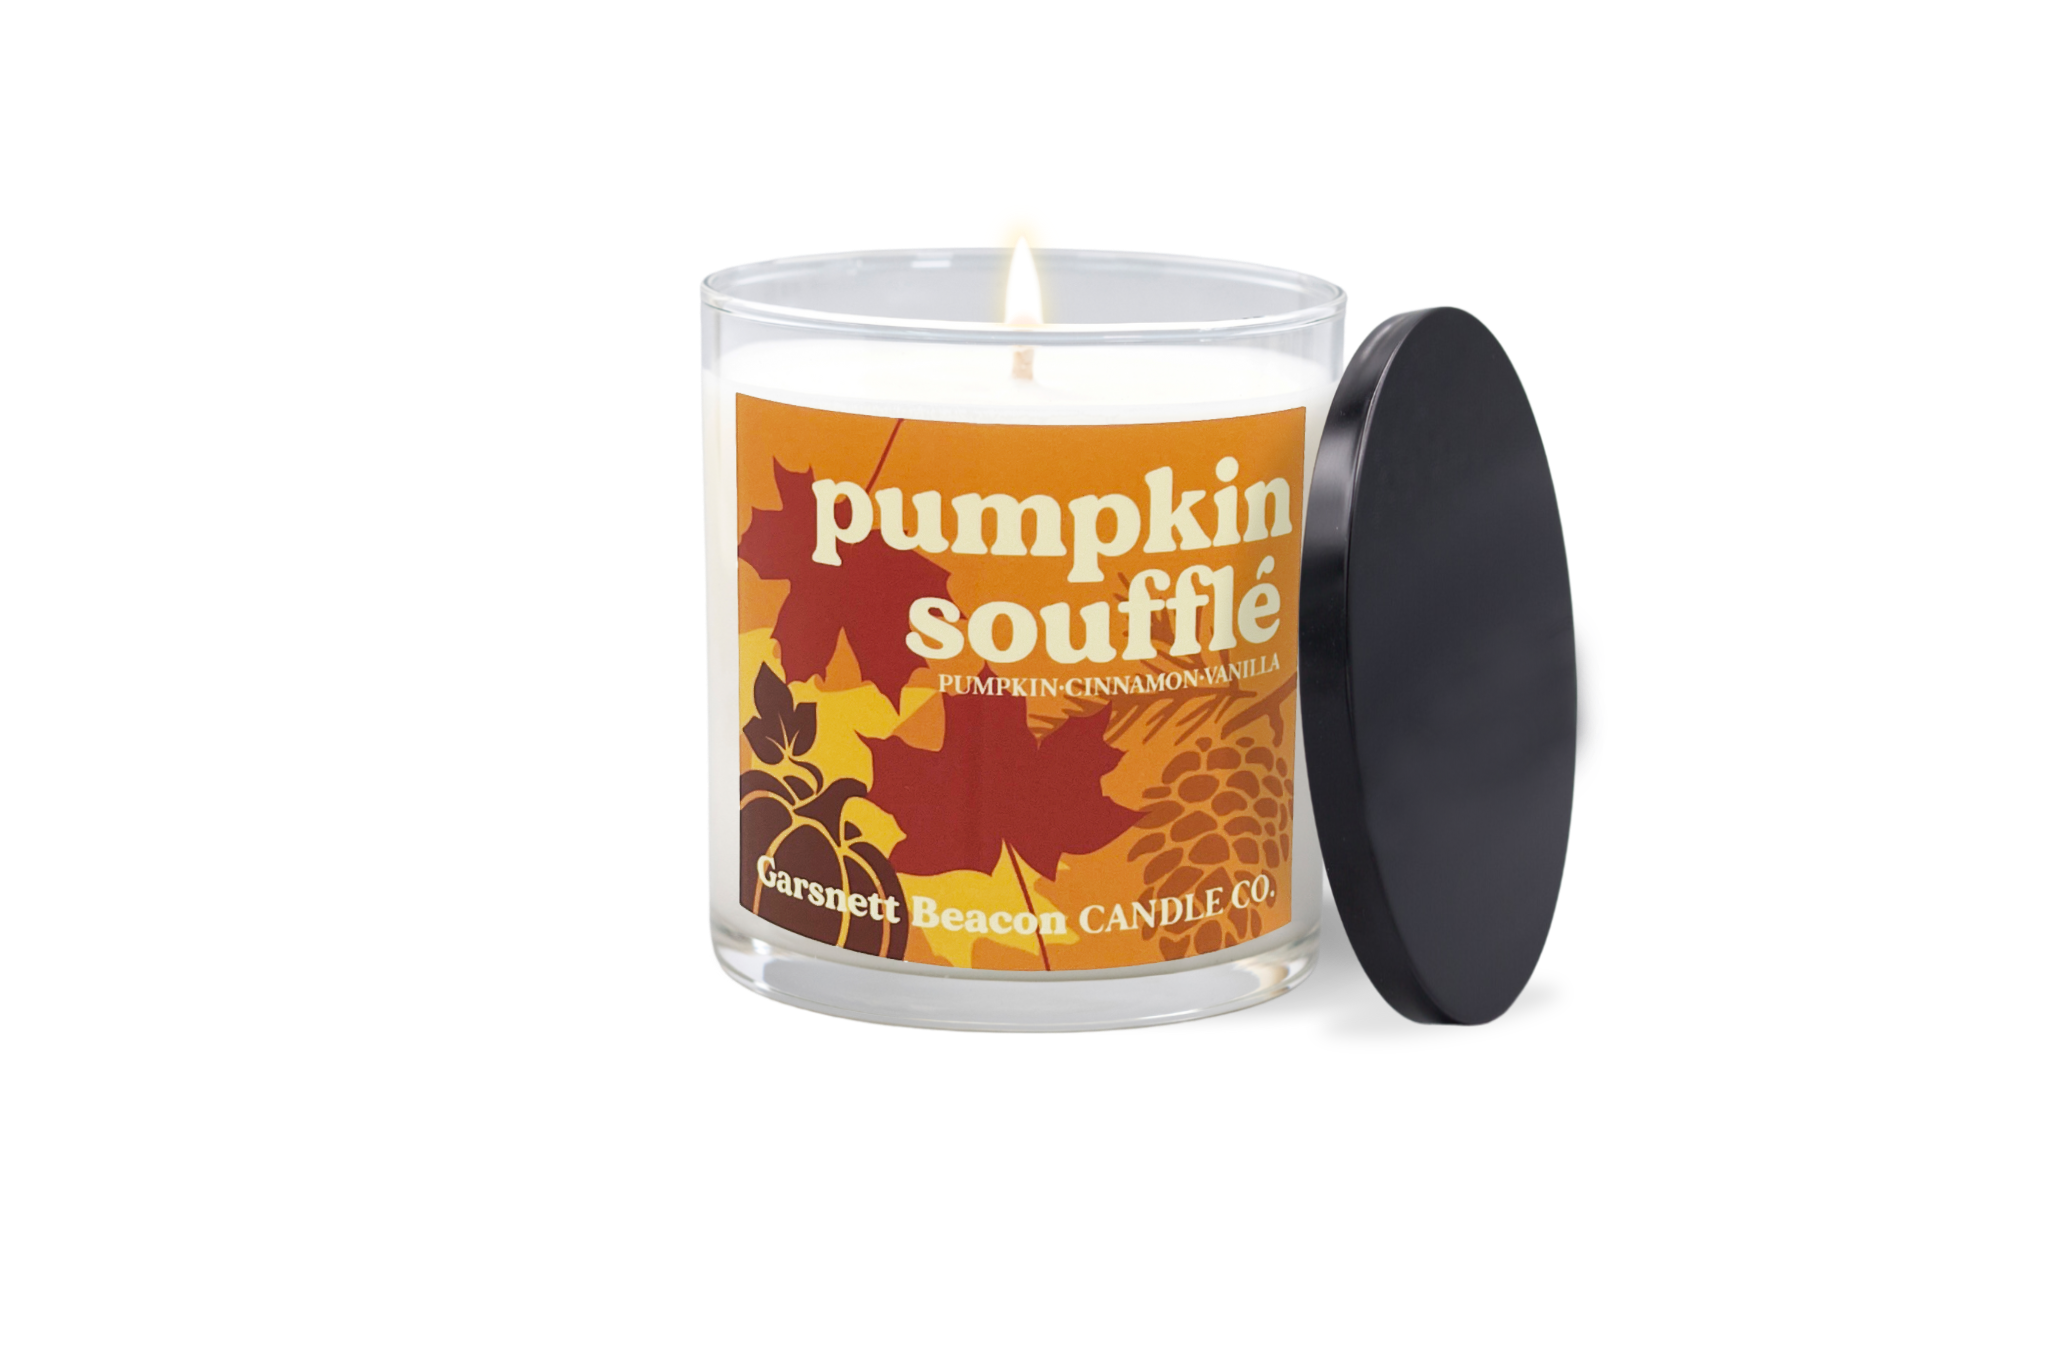 Pumpkin Soufflé Candle - Pumpkin, Cinnamon, Vanilla Scent